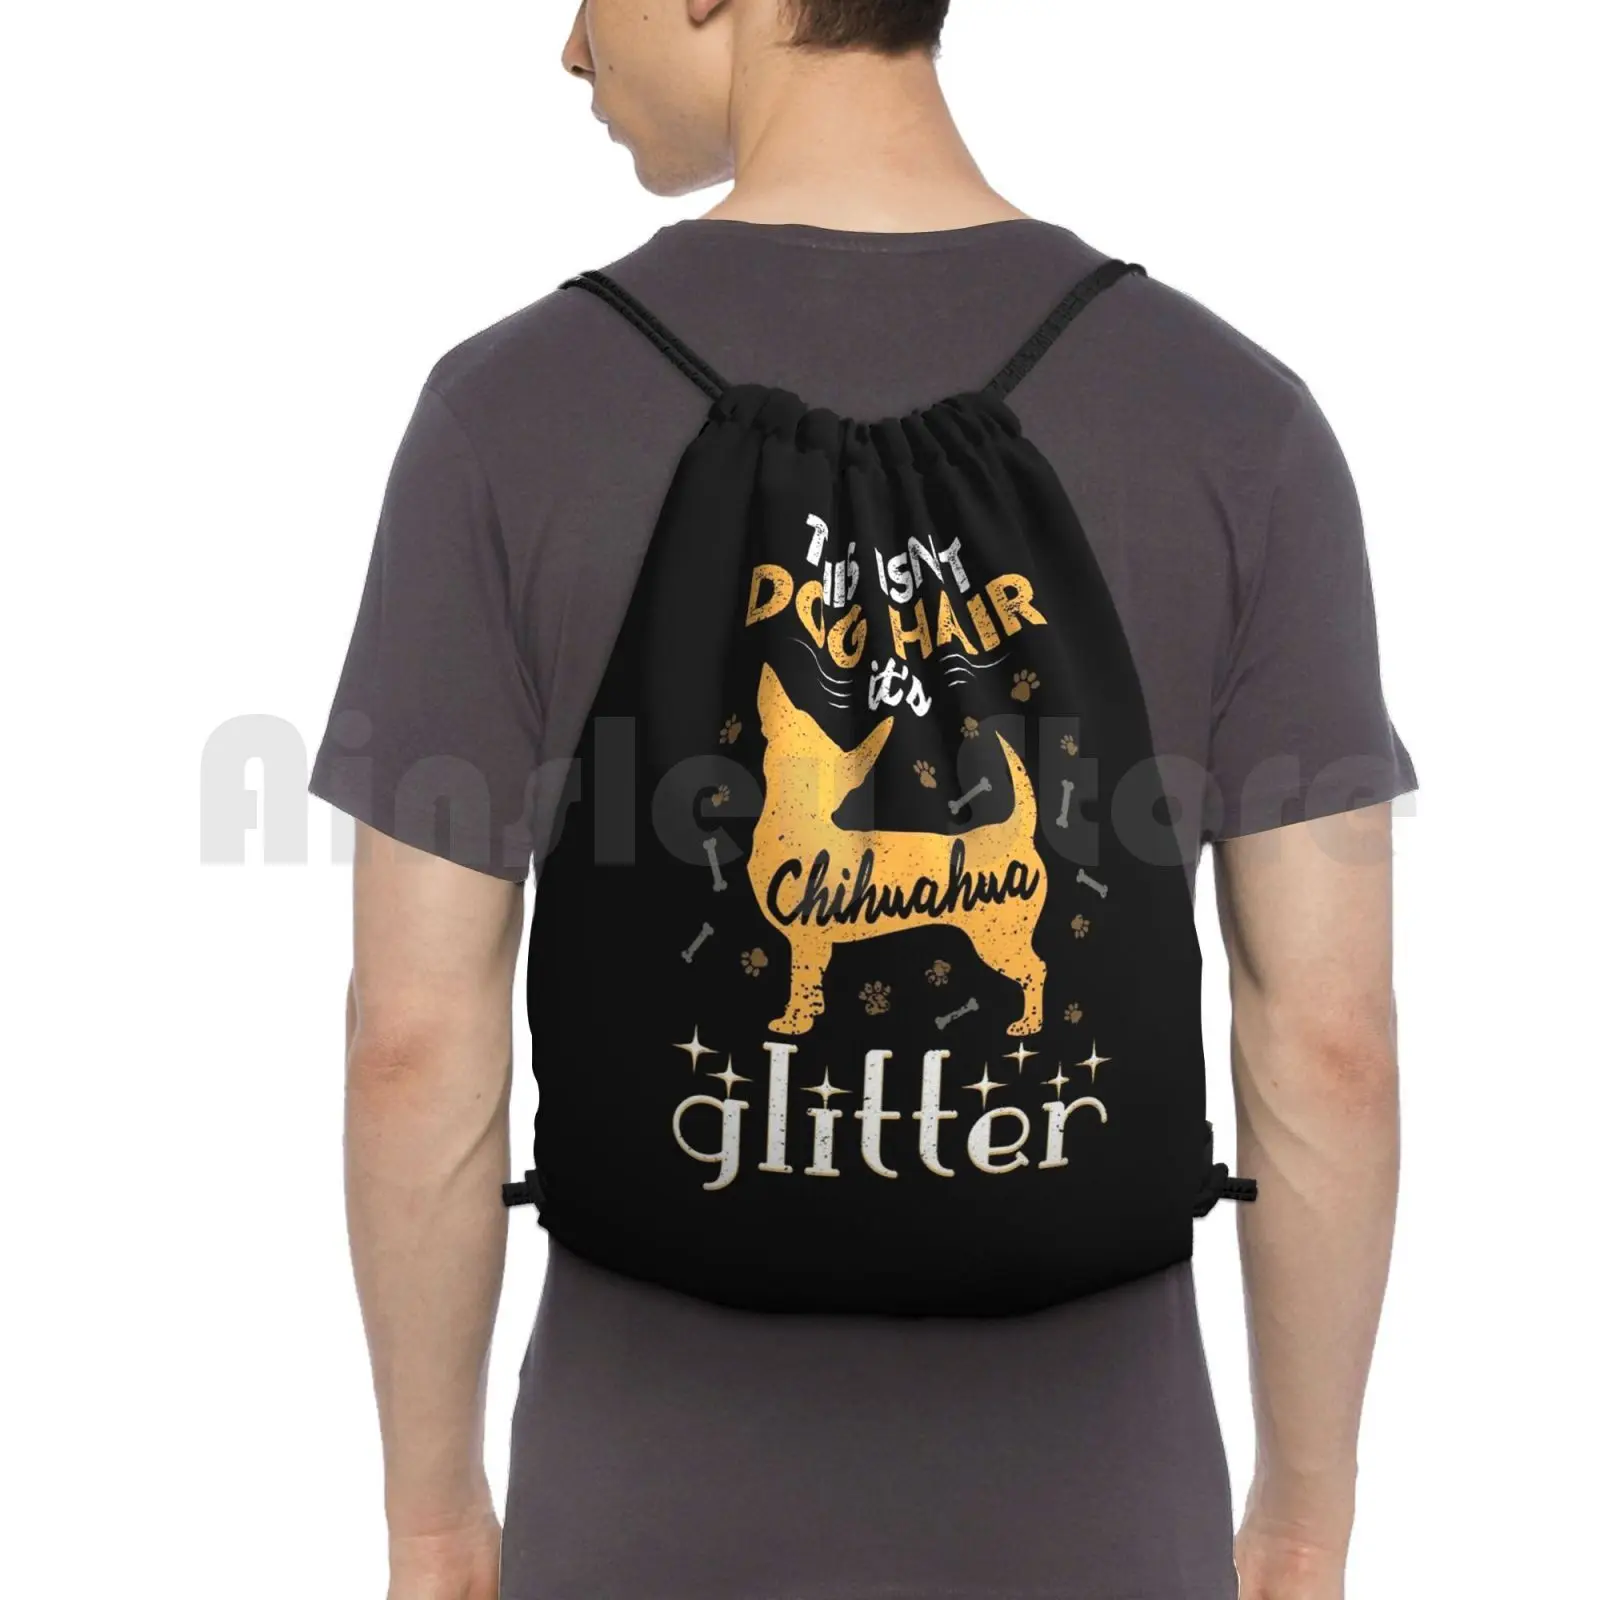 It's Not Dog Hair It's Husky Glitter Tote Bag — Potter's Printing